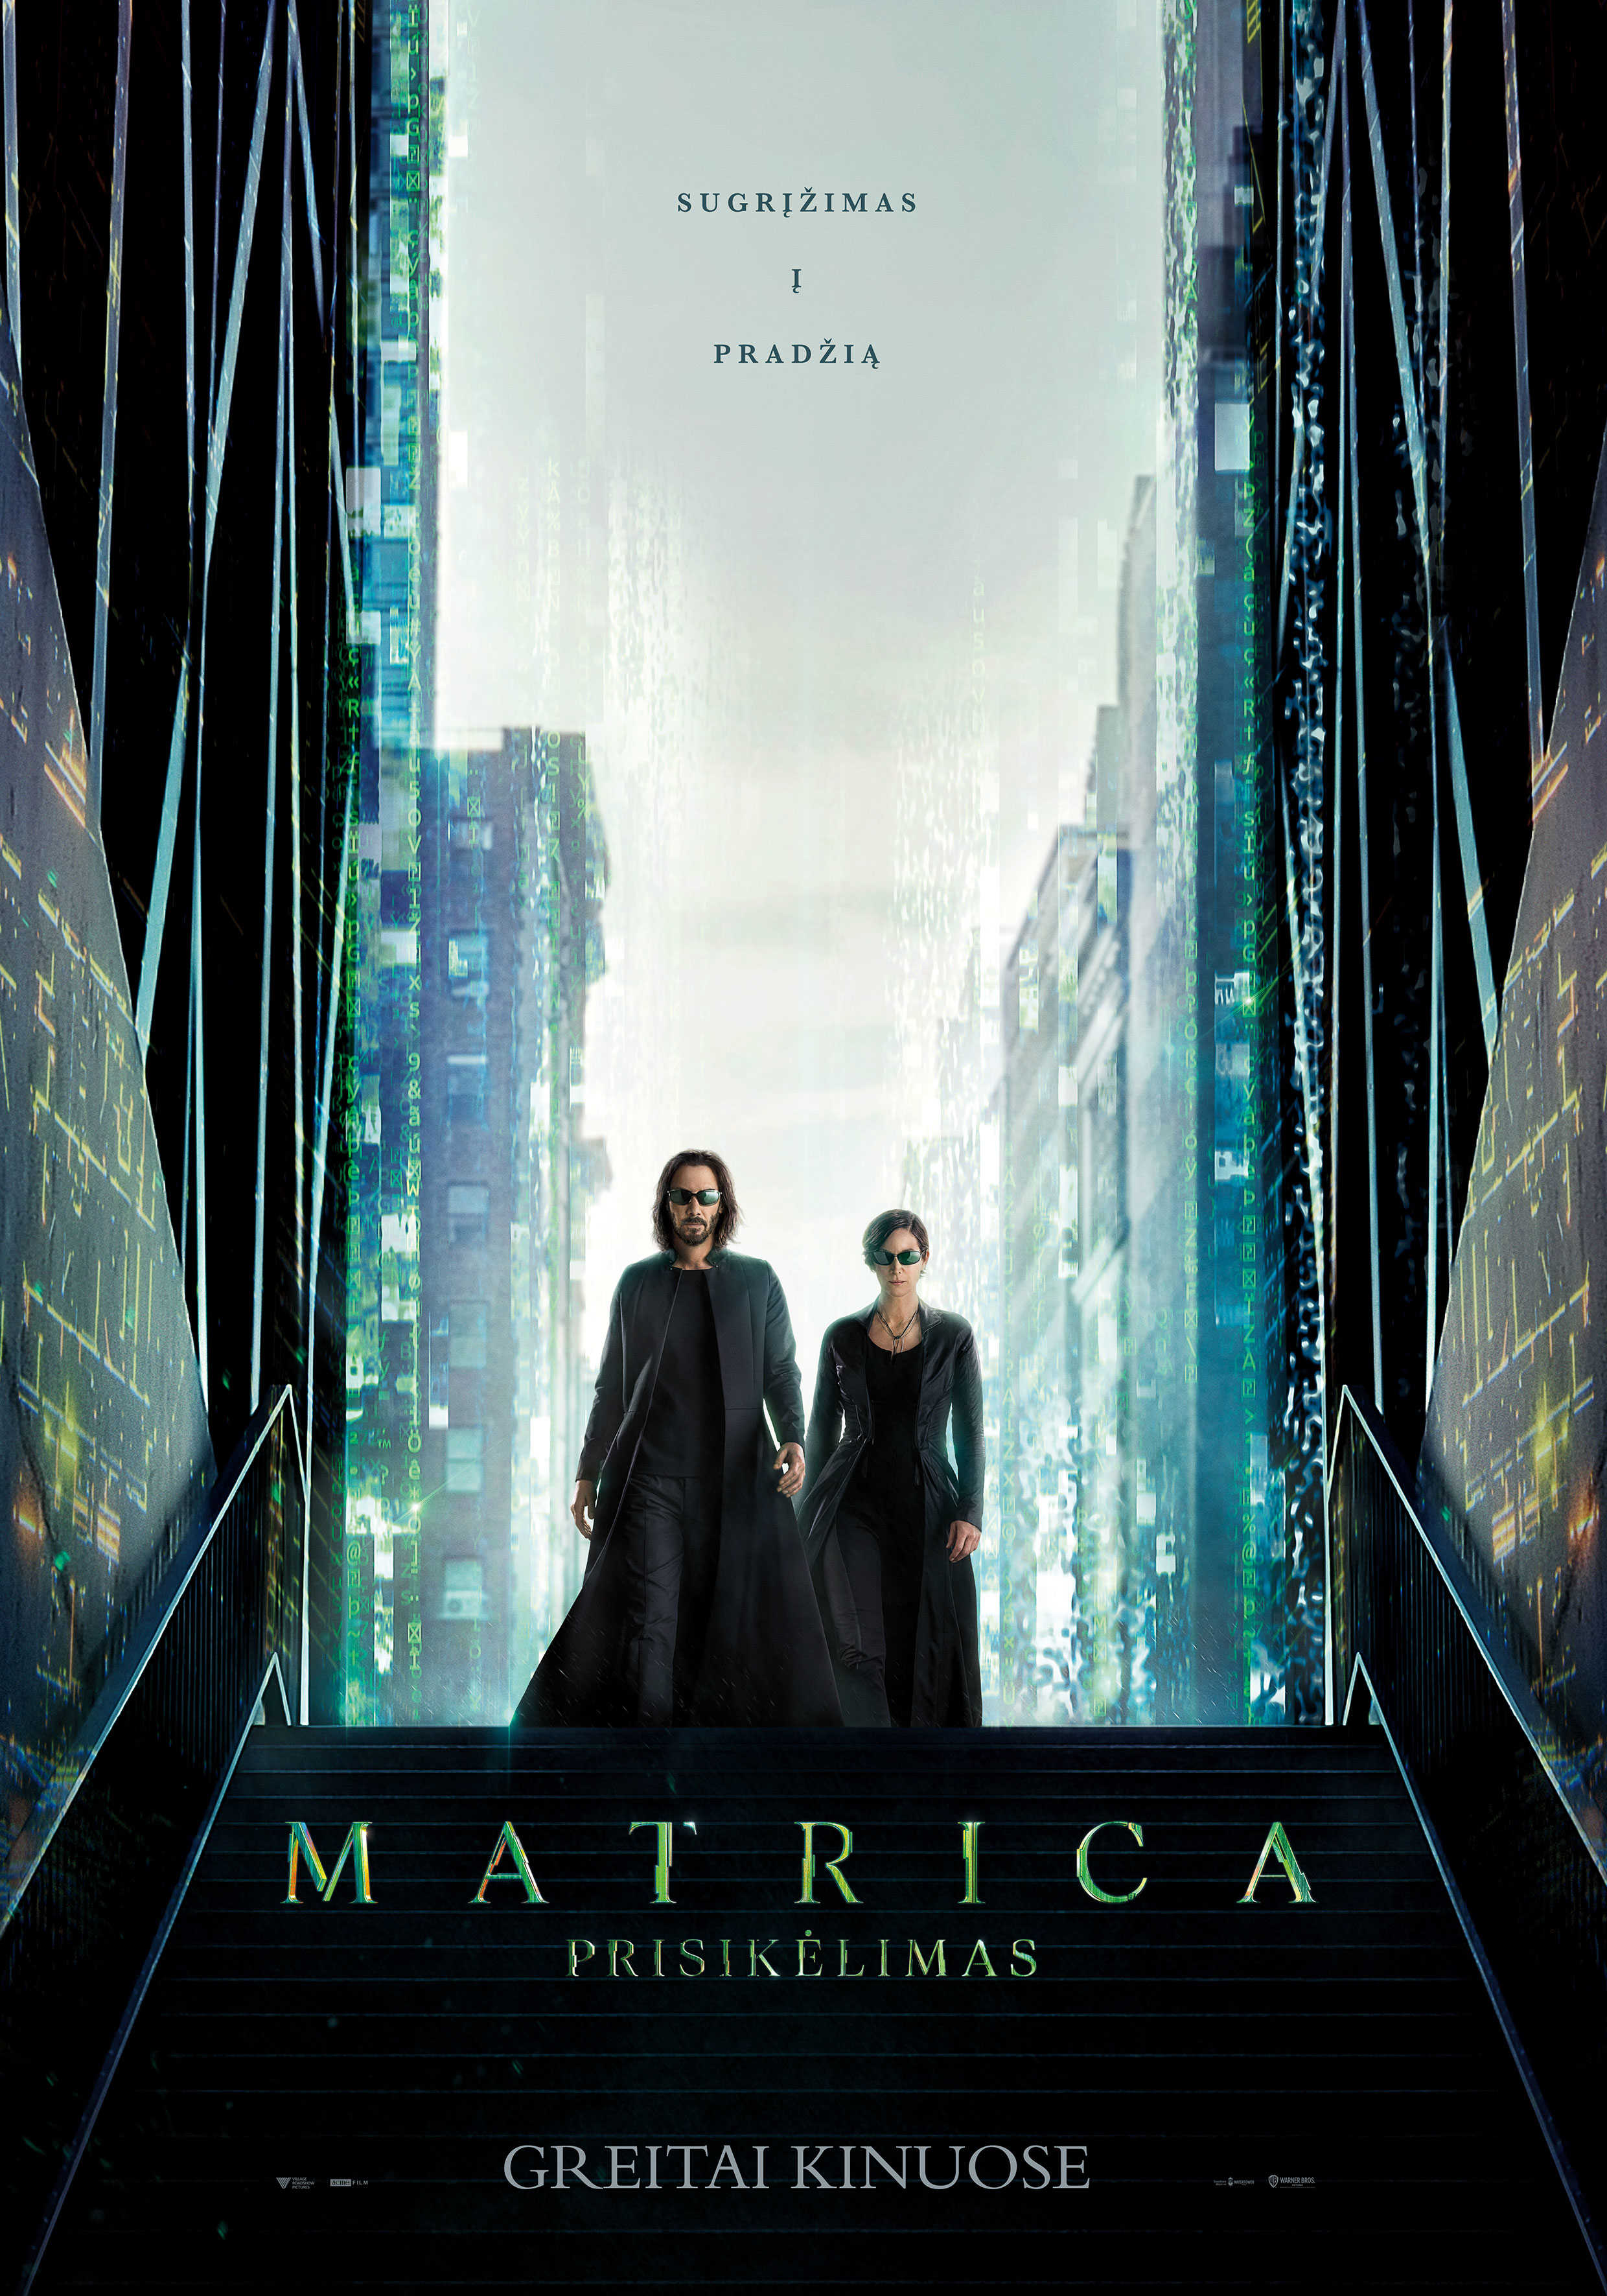 Matrica. Prisikėlimas (The Matrix. Resurrections)